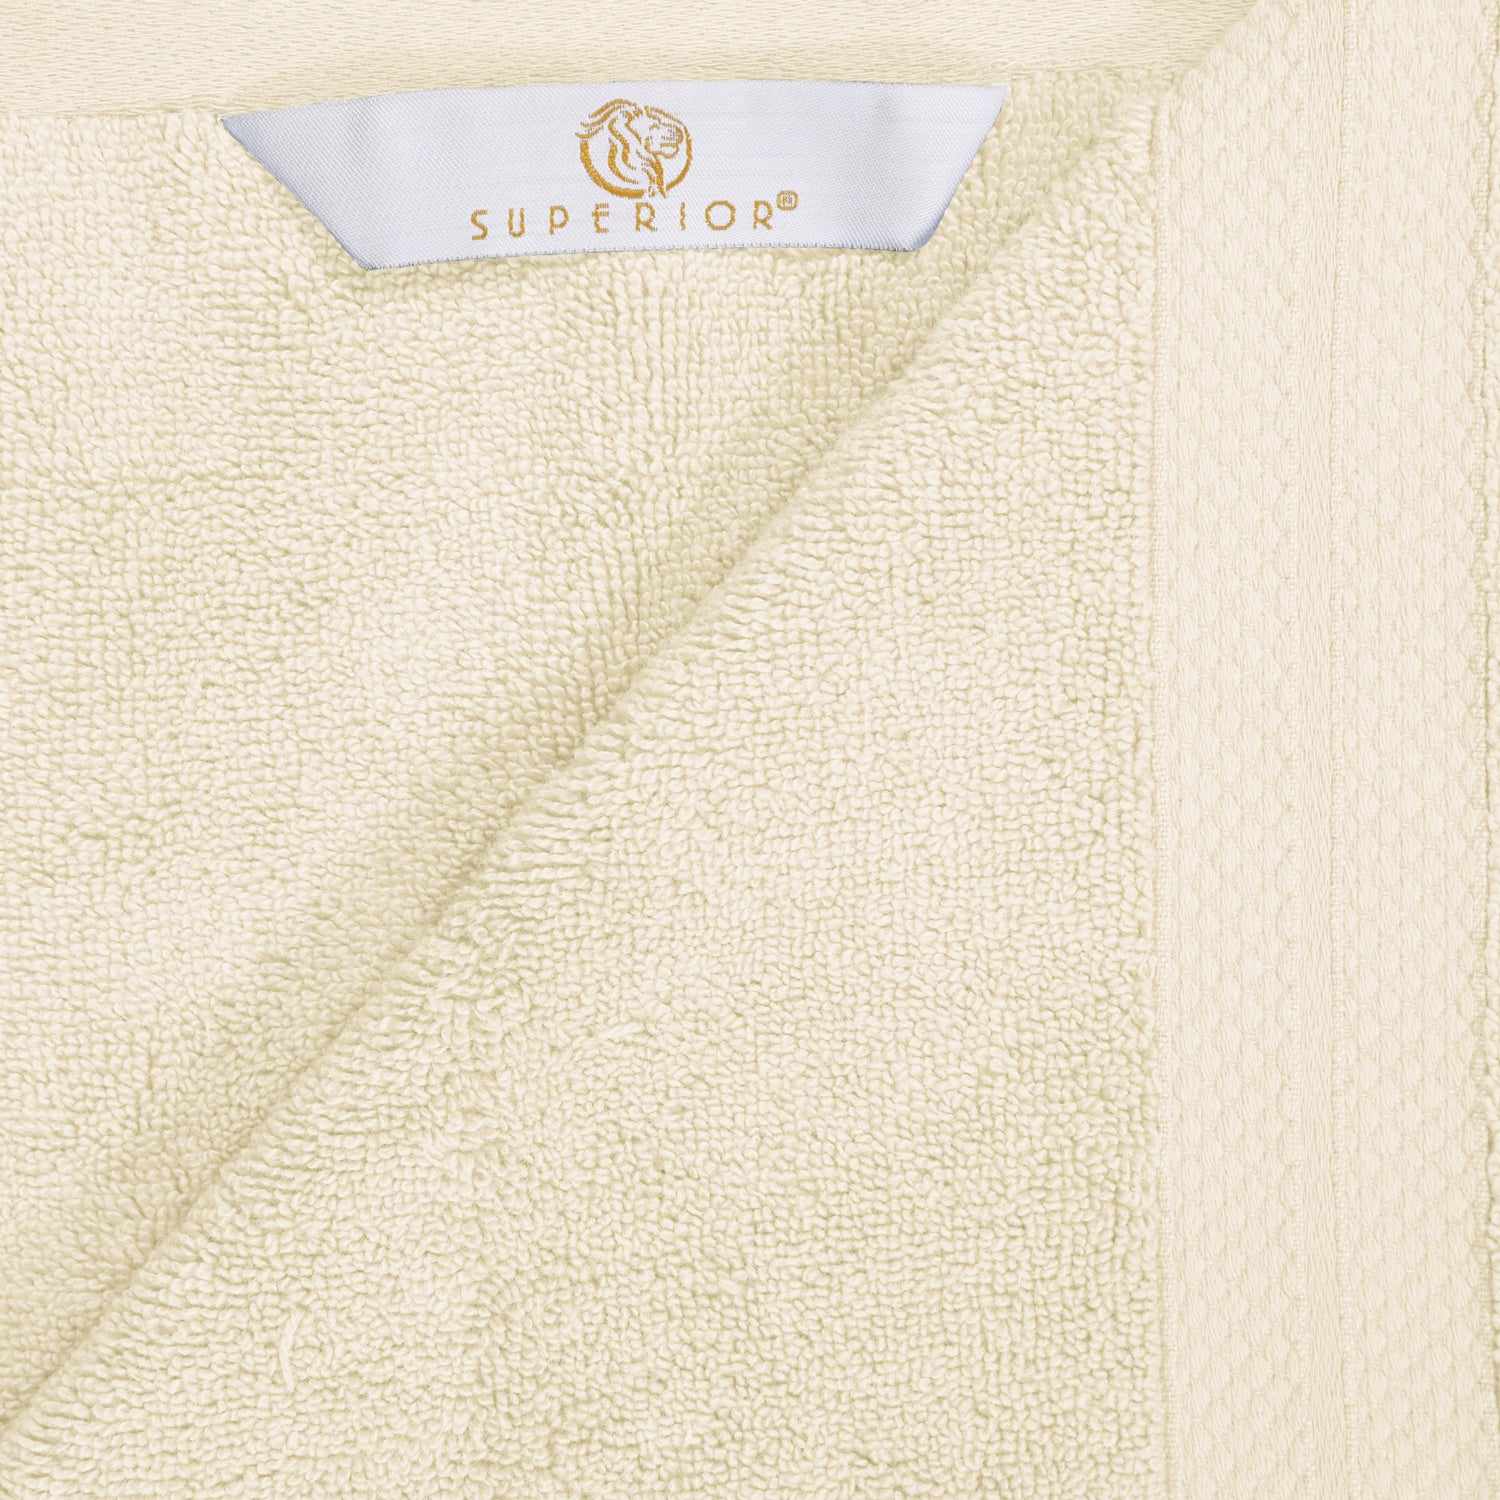  Superior Premium Turkish Cotton Assorted 6-Piece Towel Set - Ivory